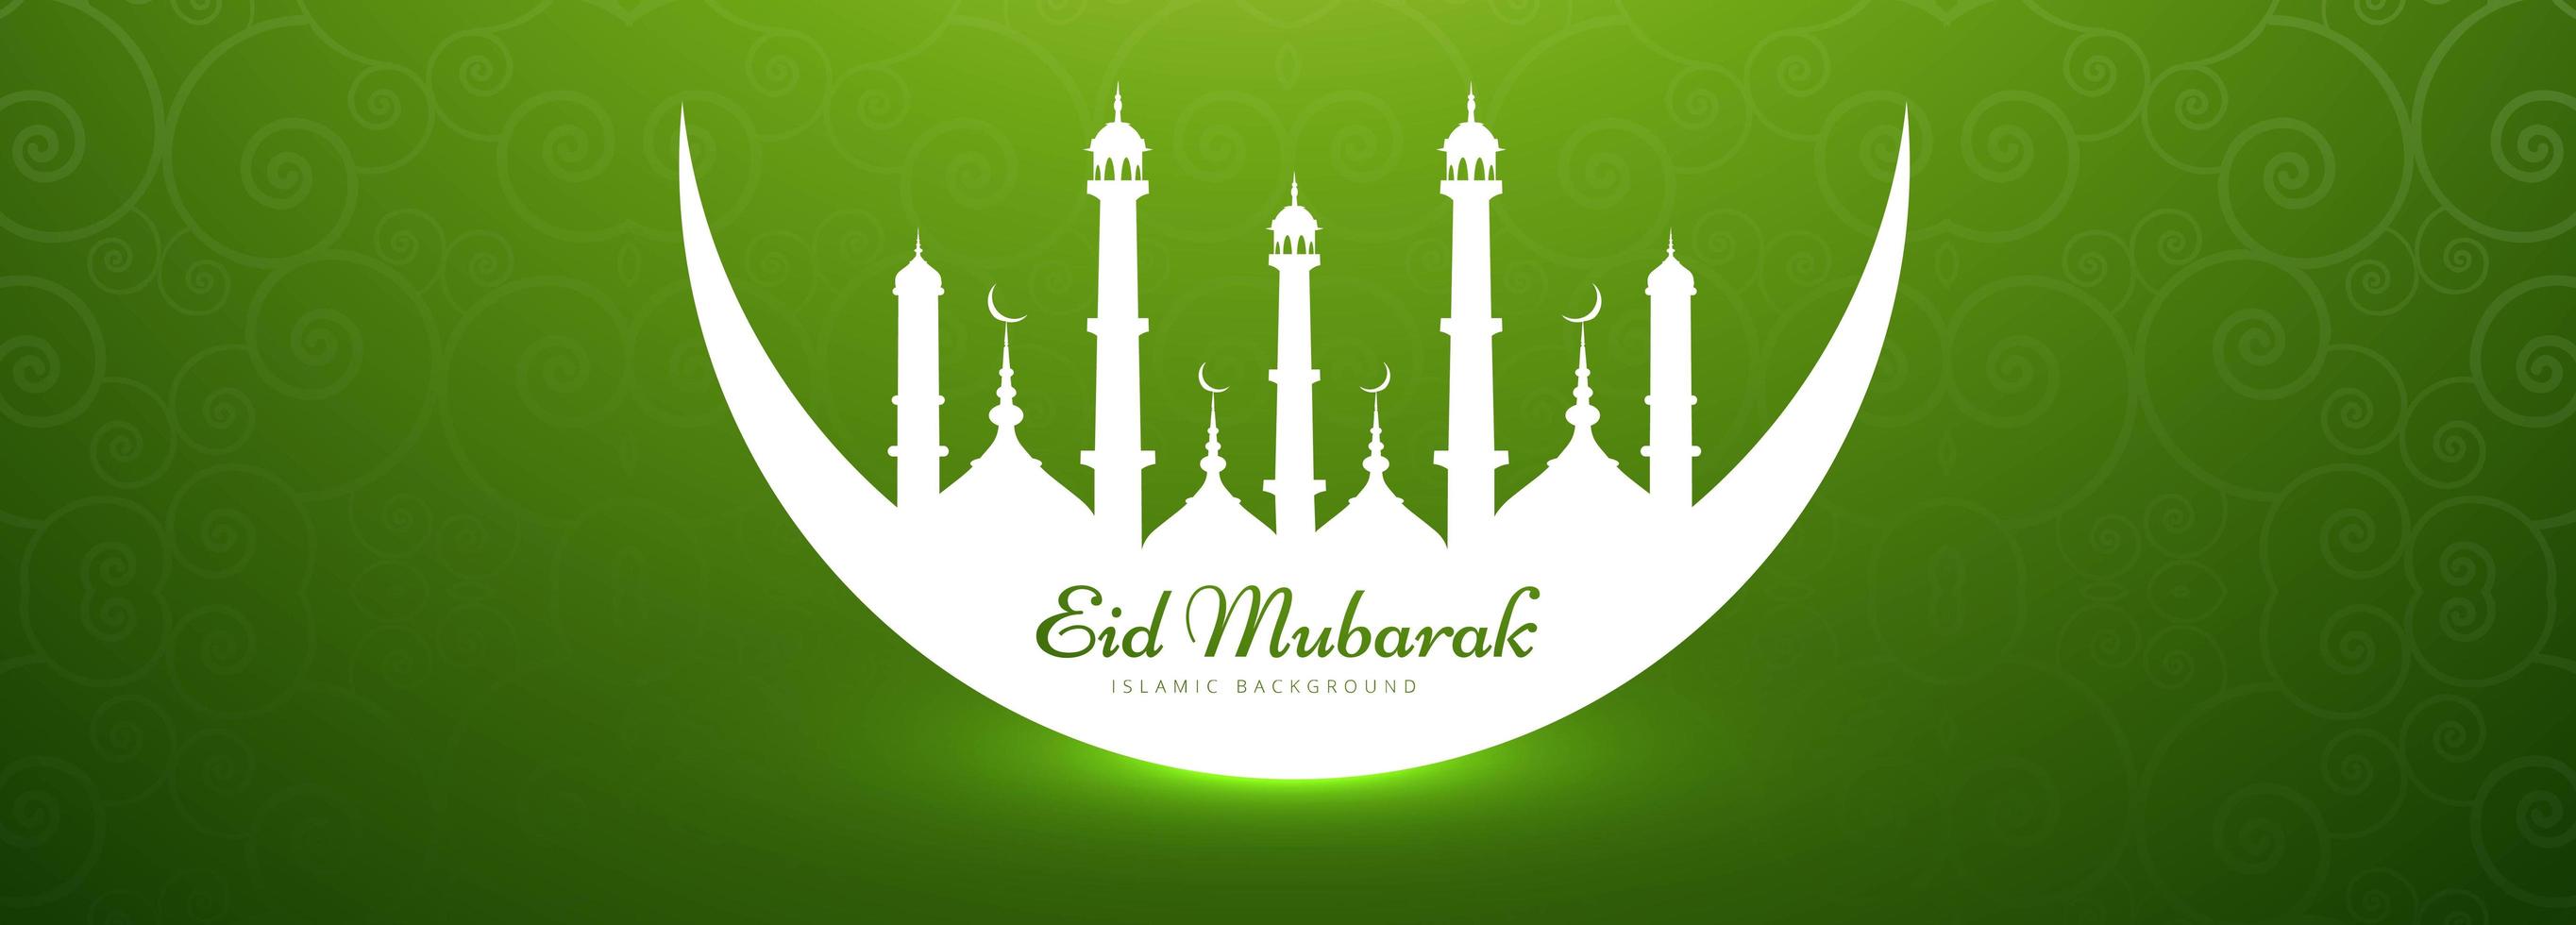 Eid Mubarak banner with mosque in crescent moon silhouette vector